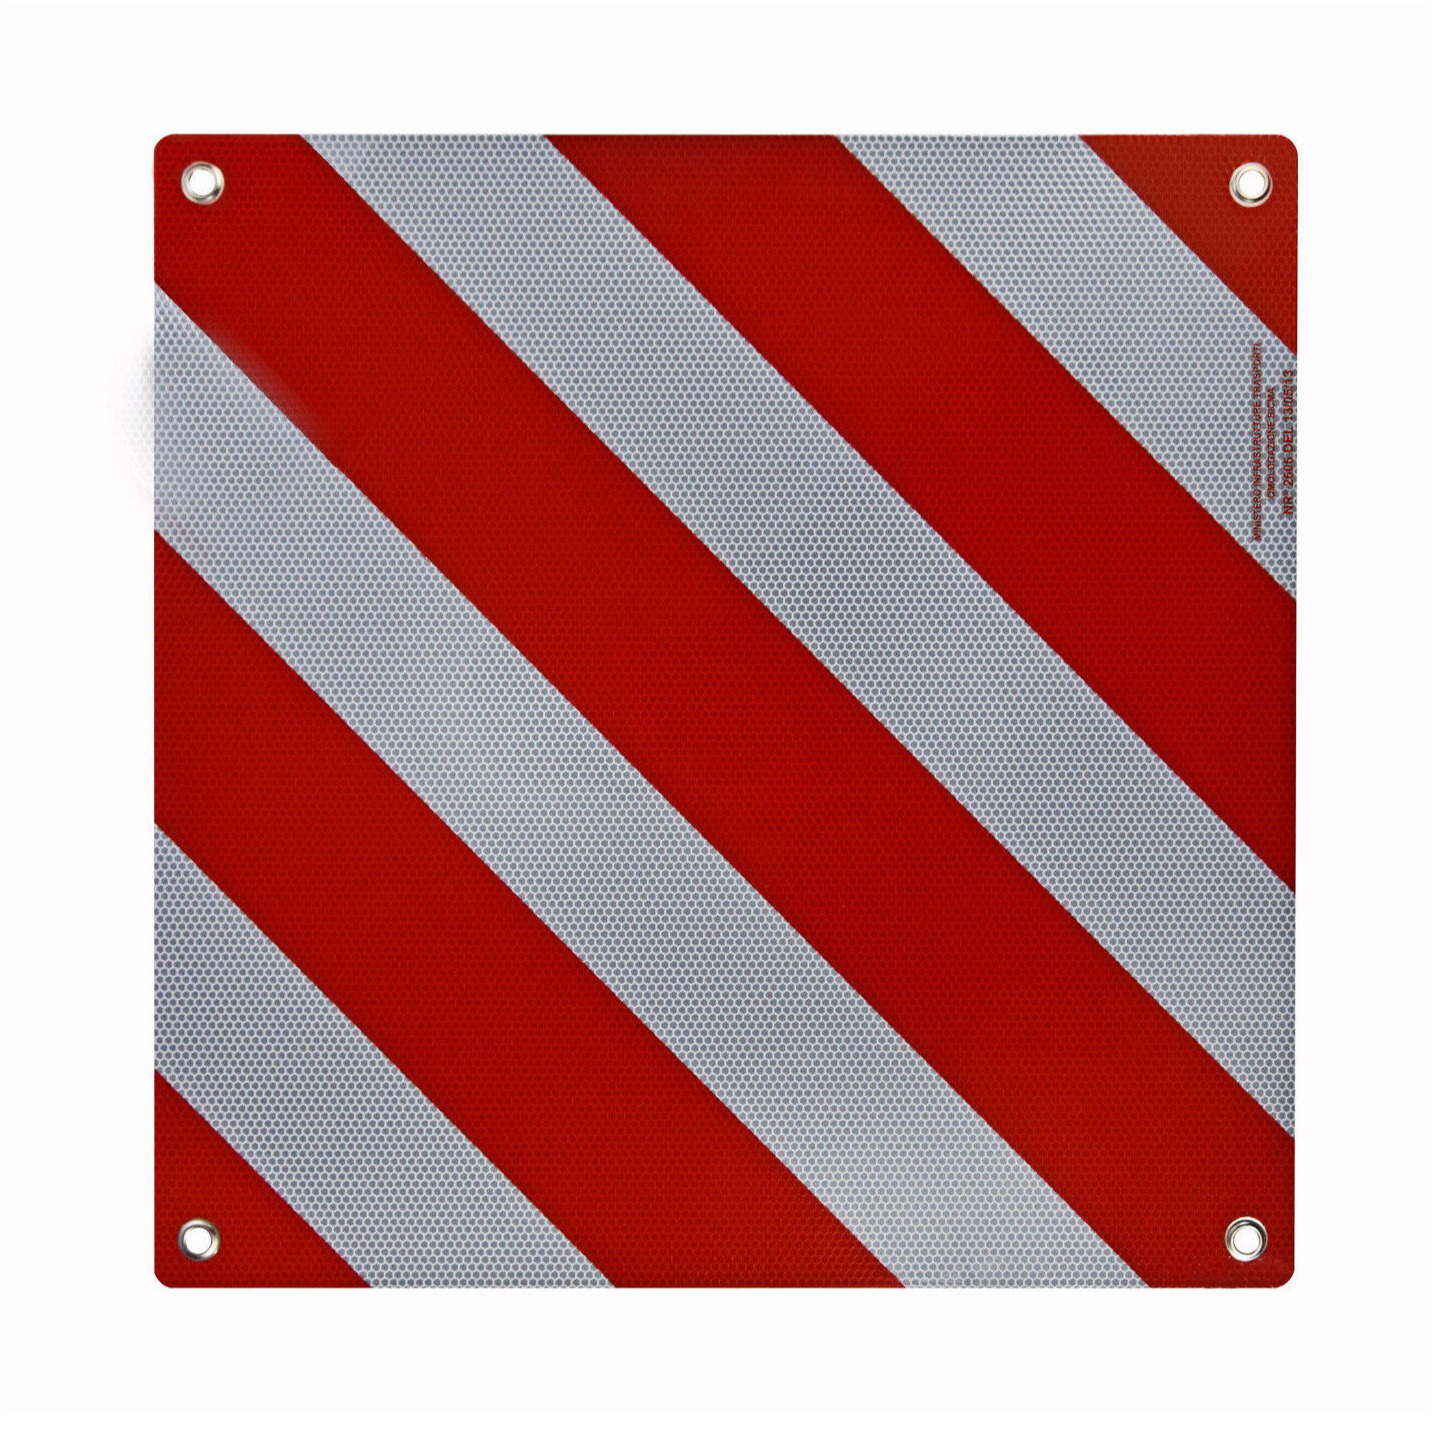 Warntafel Italien Alu retroreflektierend 50x50cm rot-weiß